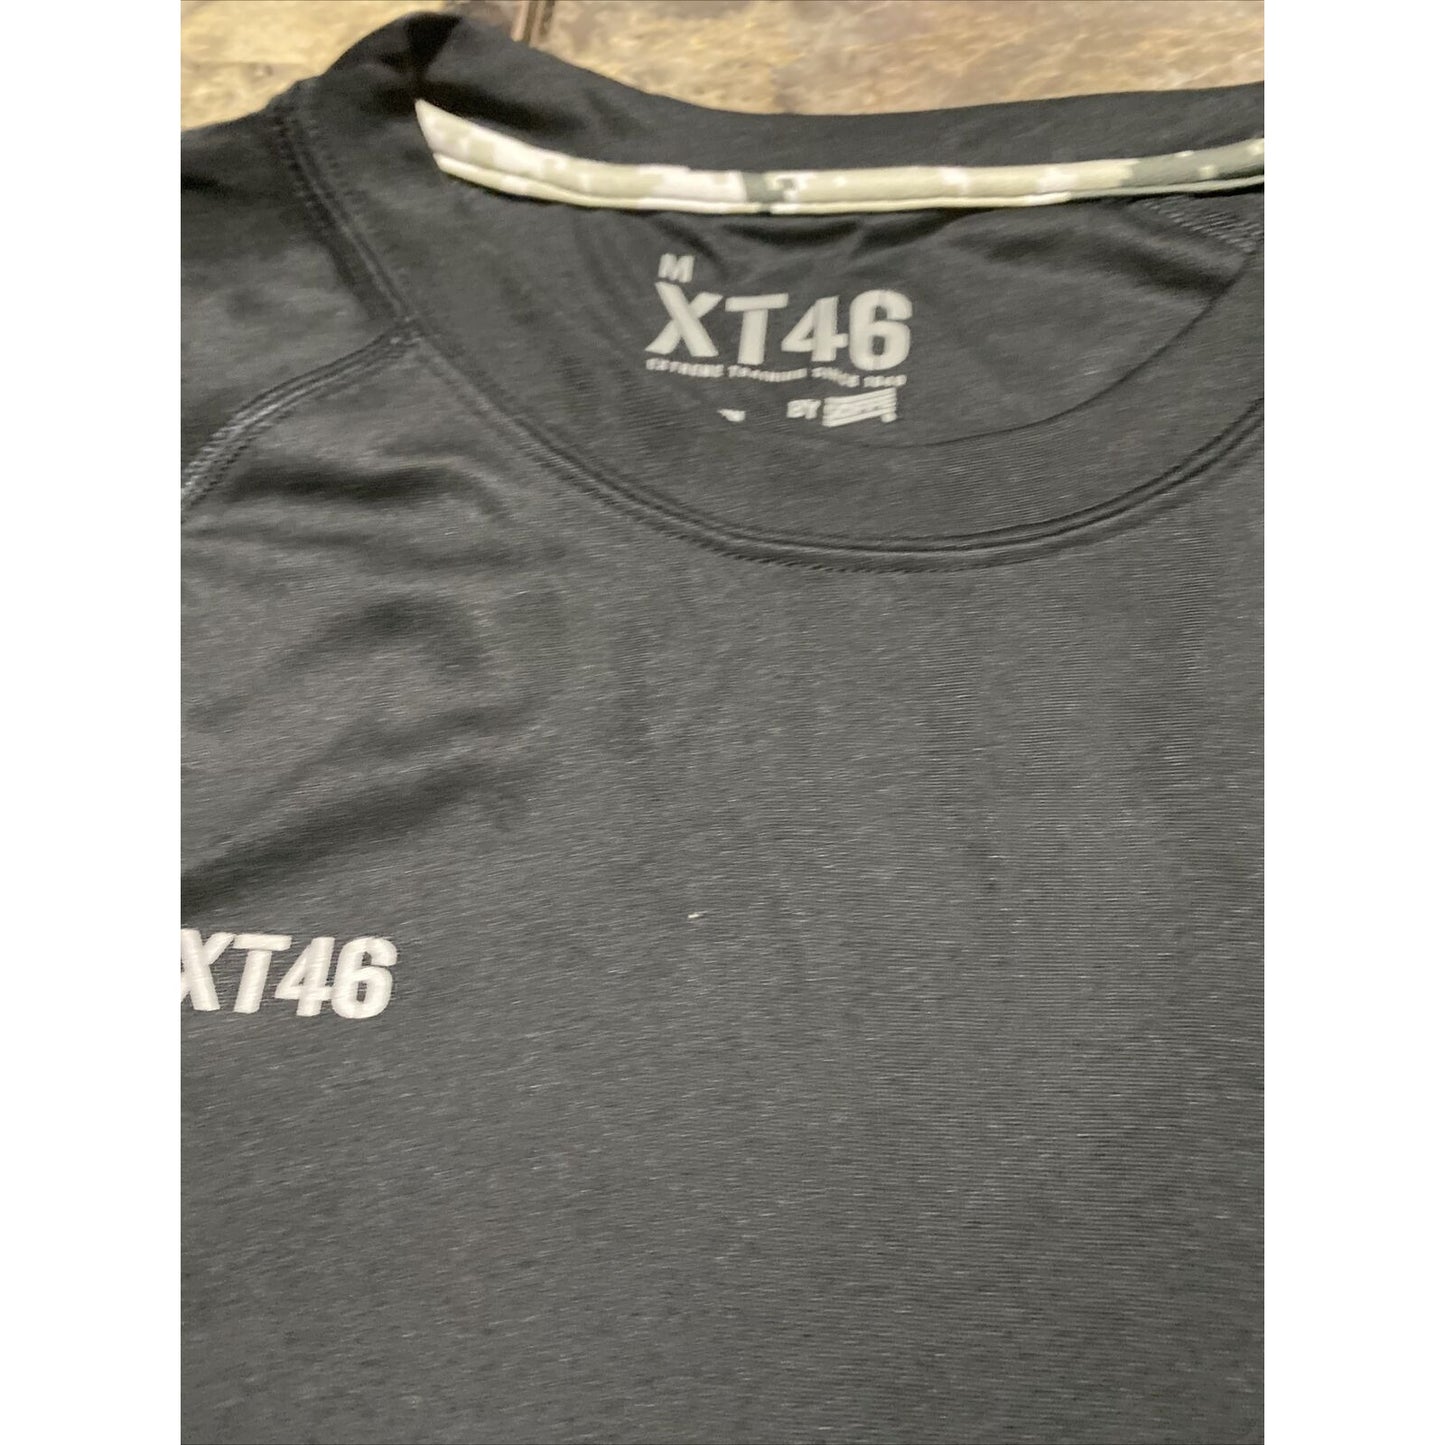 Soffe Extreme XT46 Training Men’s Medium Black & Camo Military Polyester T-shirt